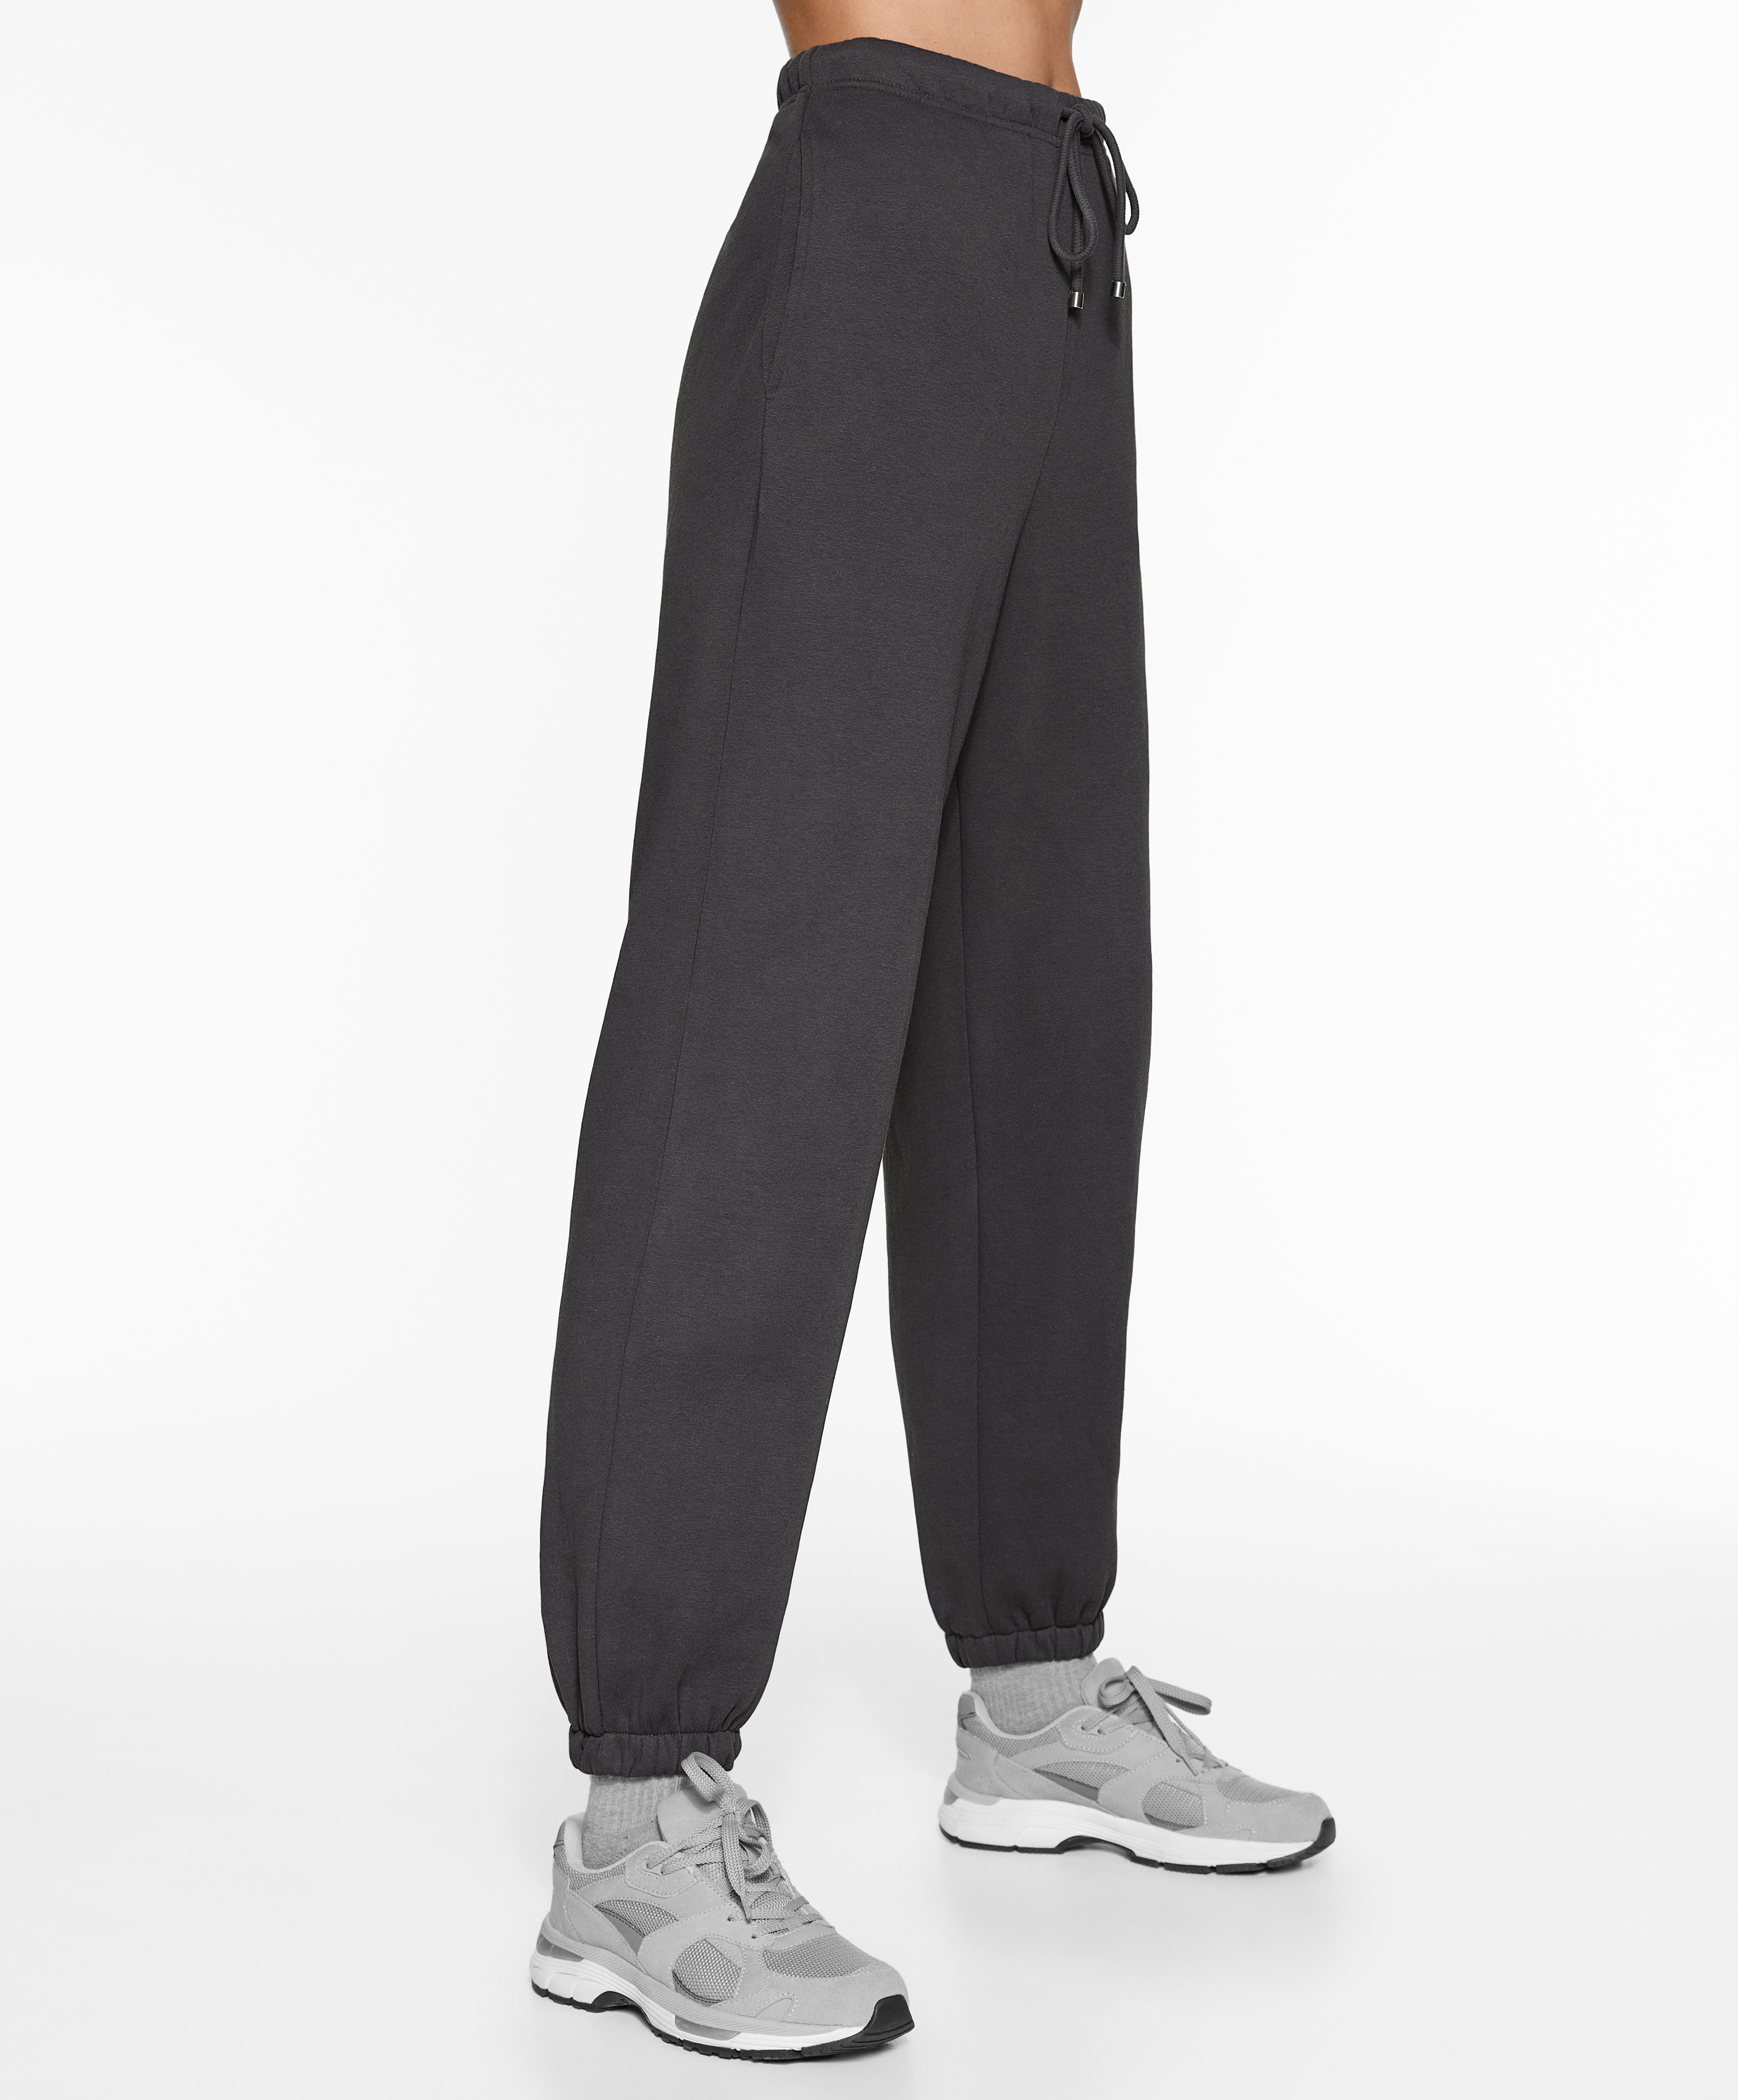 Pantaloni jogger relaxed in cotone slavato